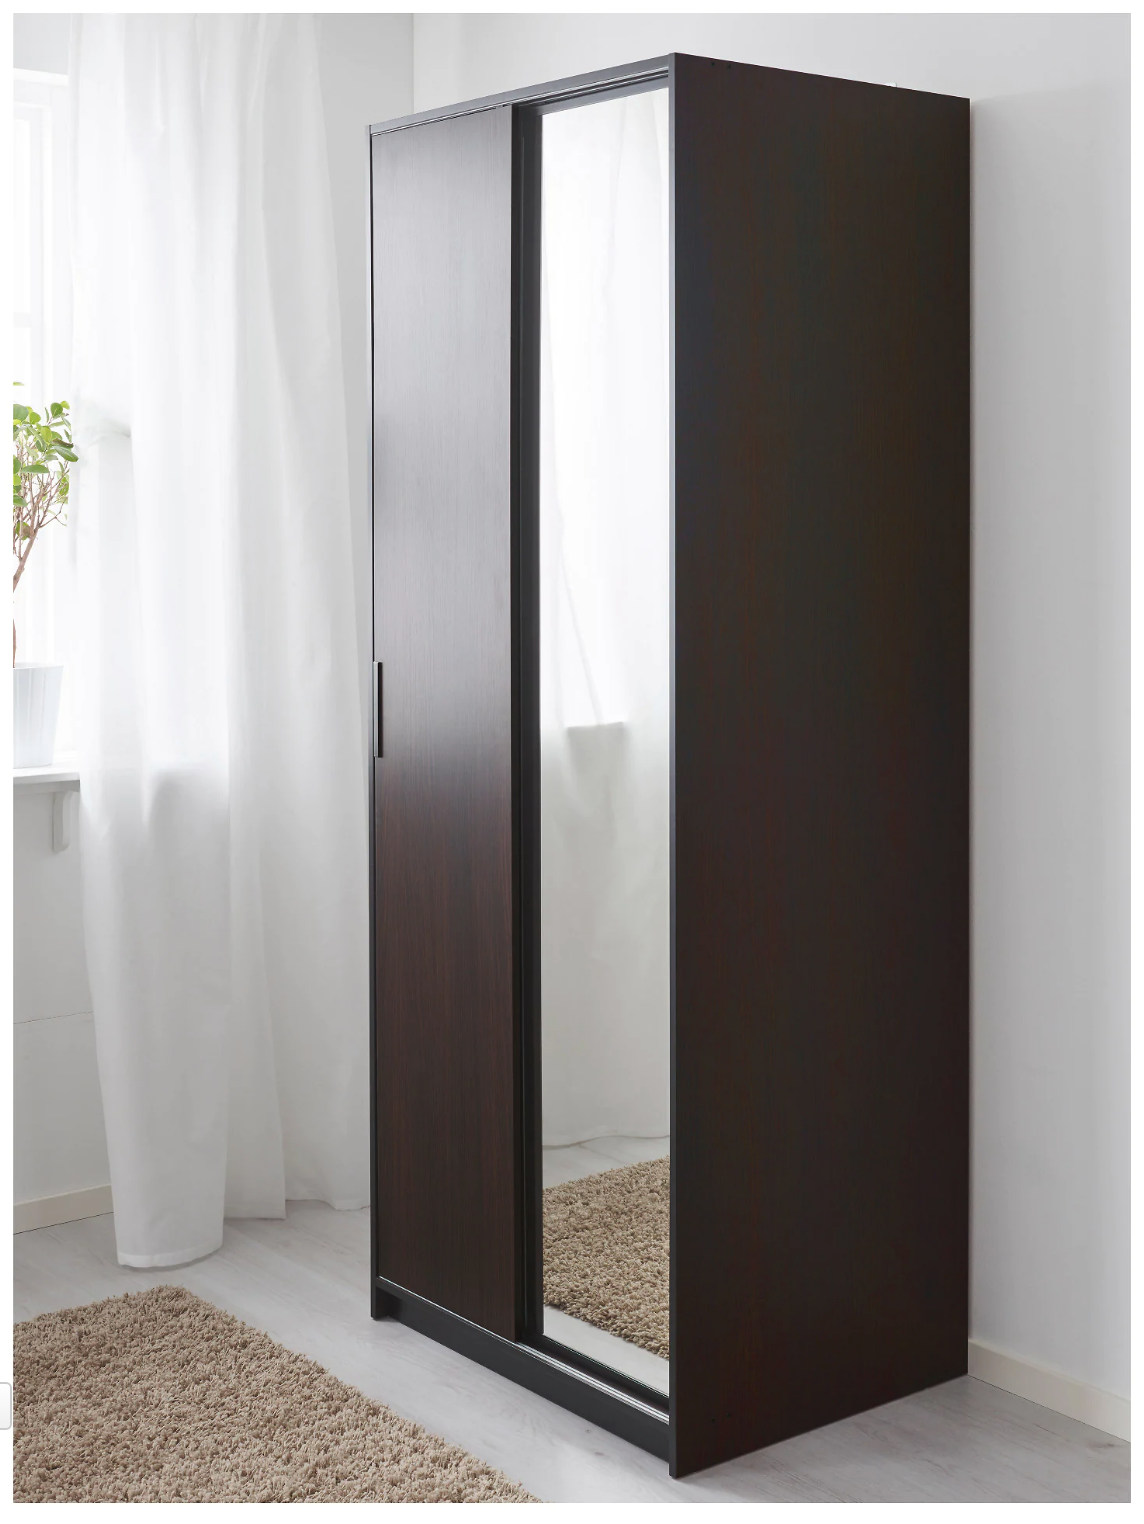 IKEA TRYSIL wardrobe with dark wood and mirrored door